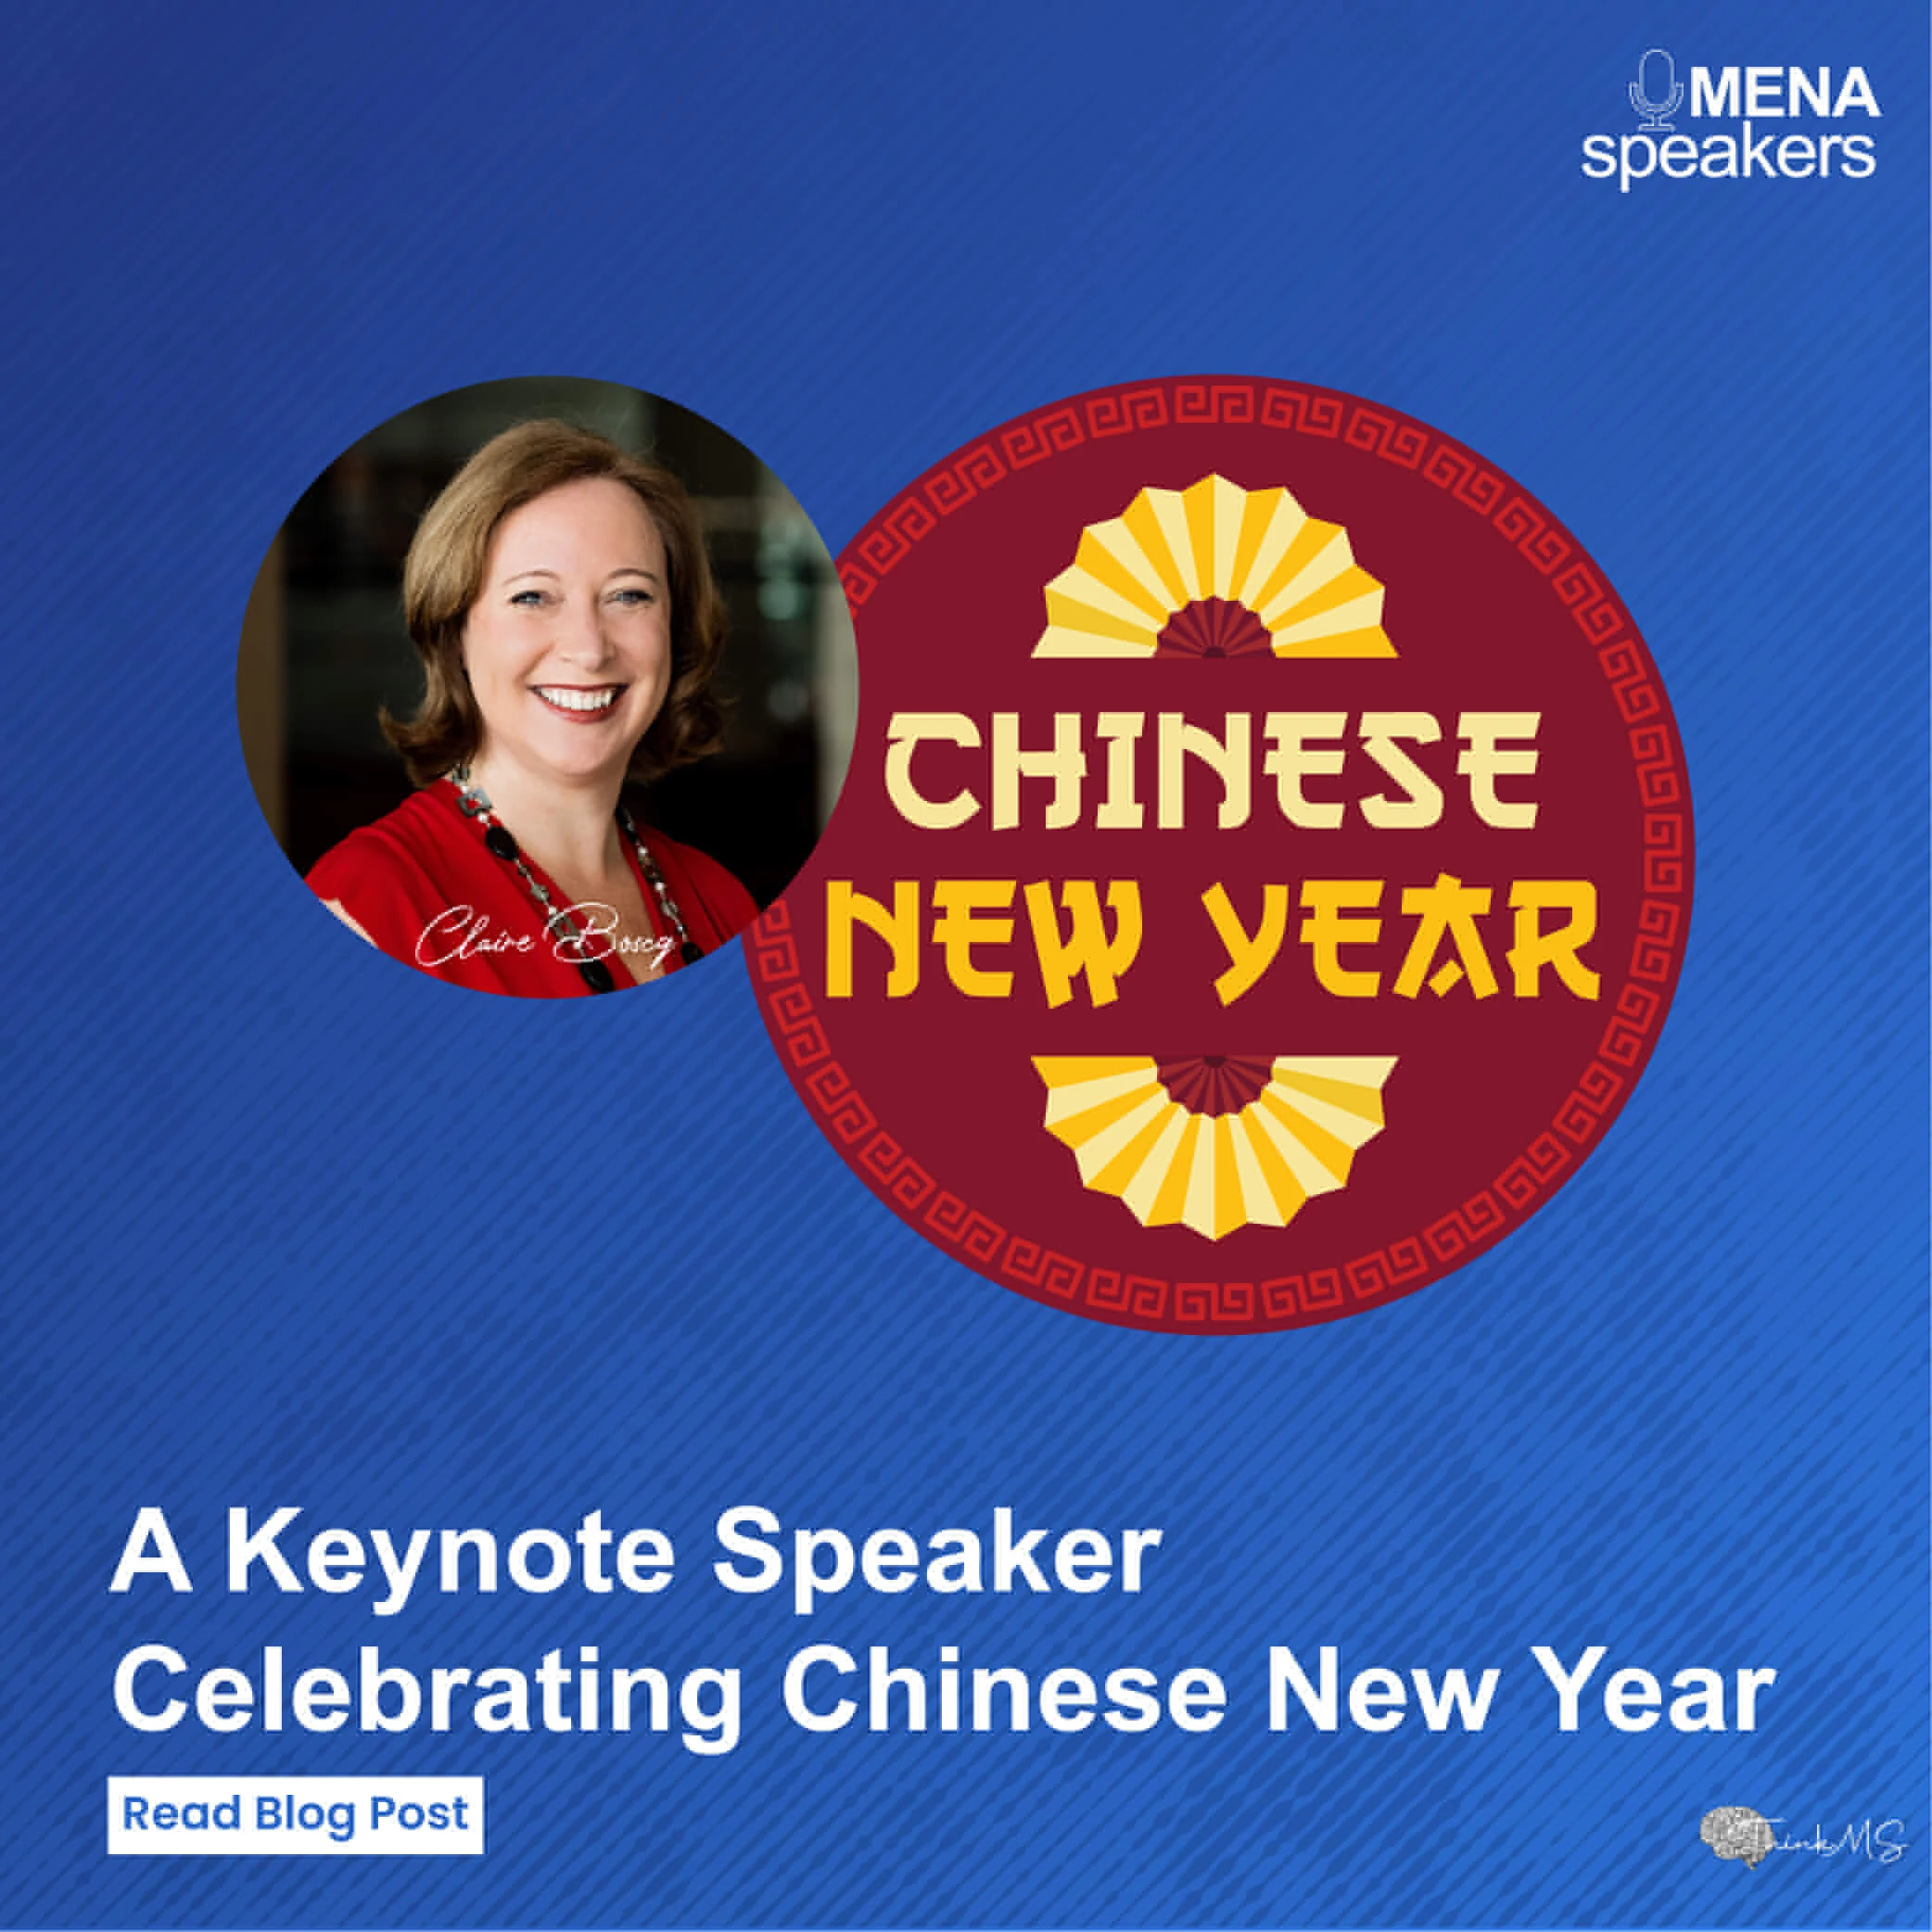 A Keynote Speaker Celebrating Chinese New Year